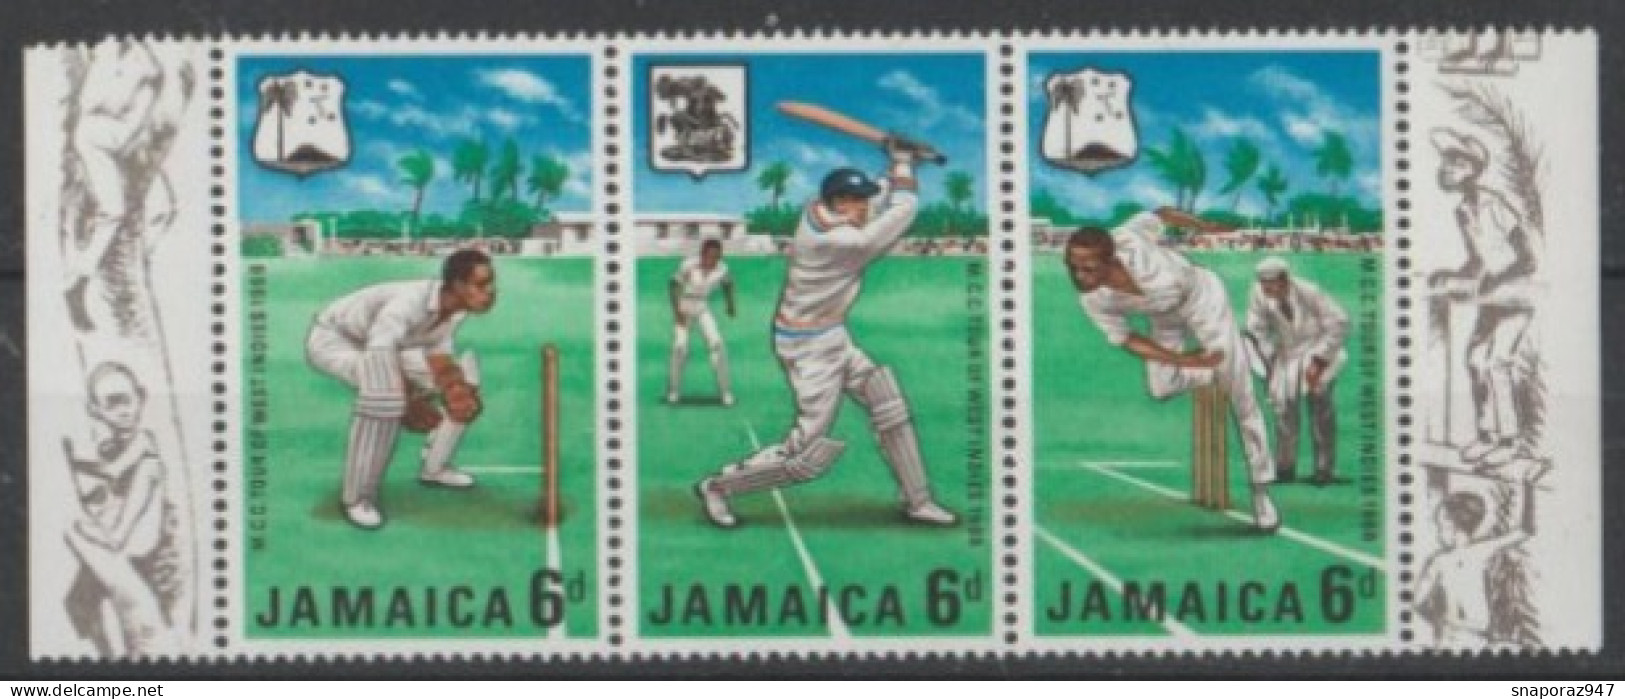 1968 Jamaica Cricket Set MNH** Rx99 - Cricket